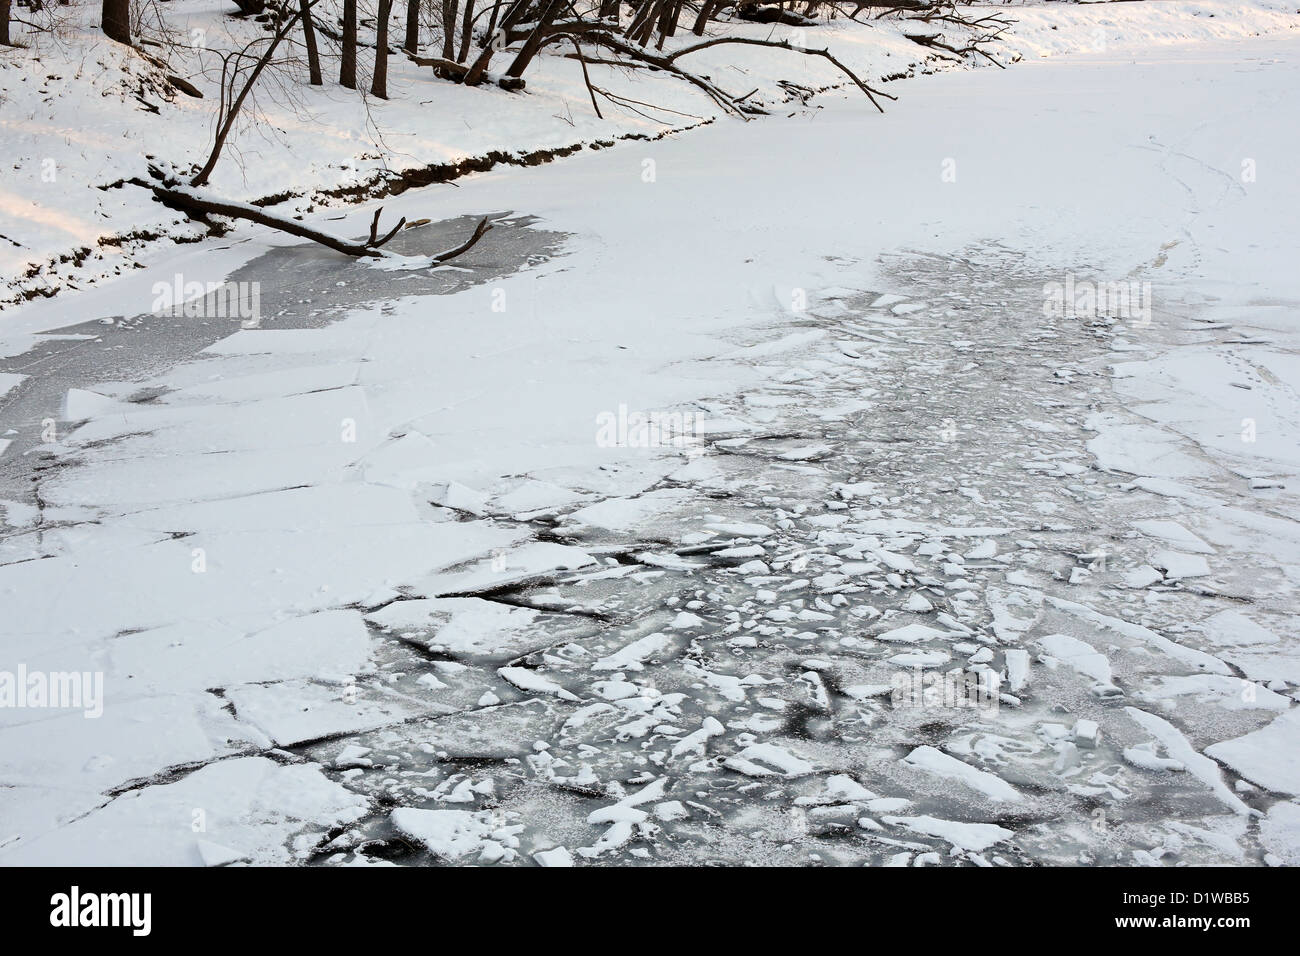 Minnesota River, im Winter eingefroren. Stockfoto